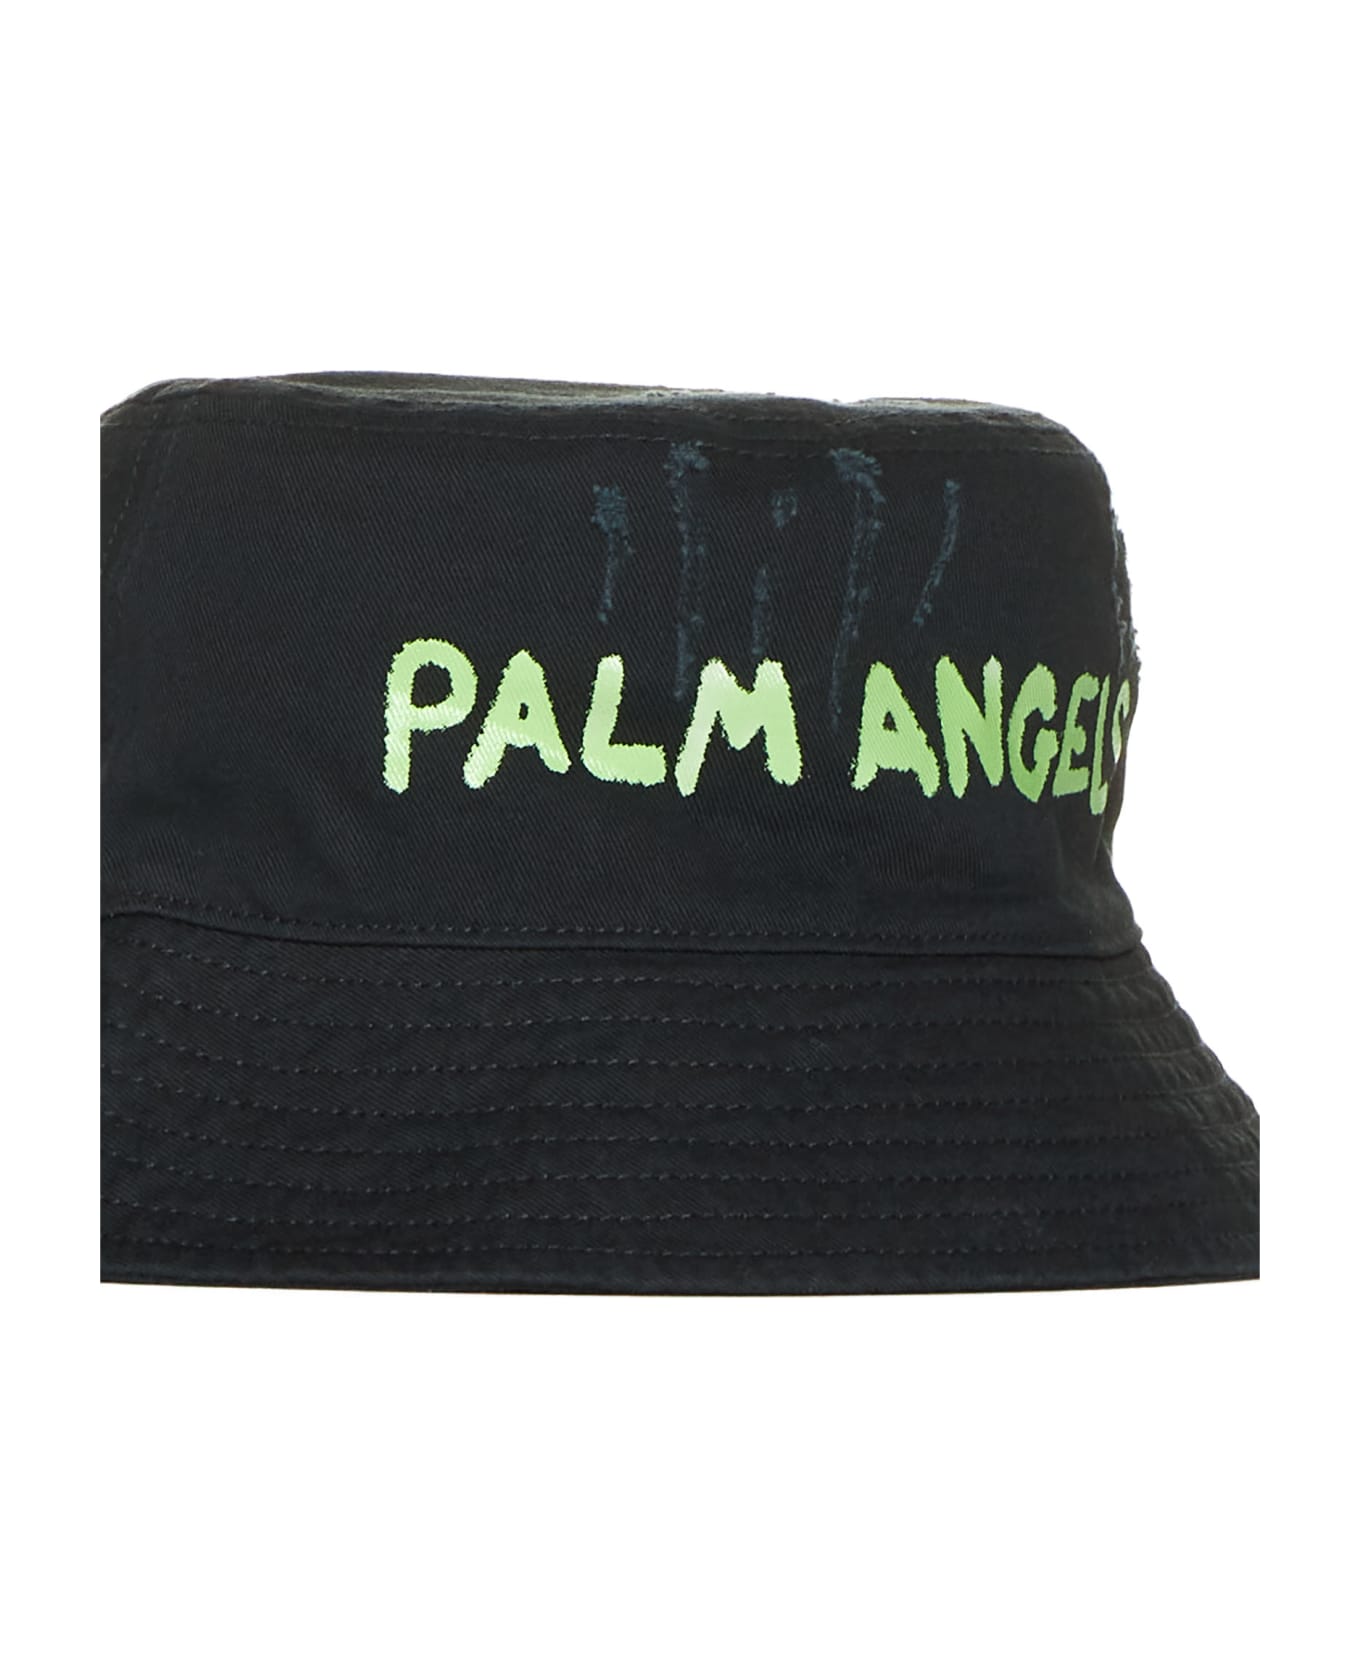 Palm Angels Logo Printed Distressed Bucket Hat - Black green fl 帽子